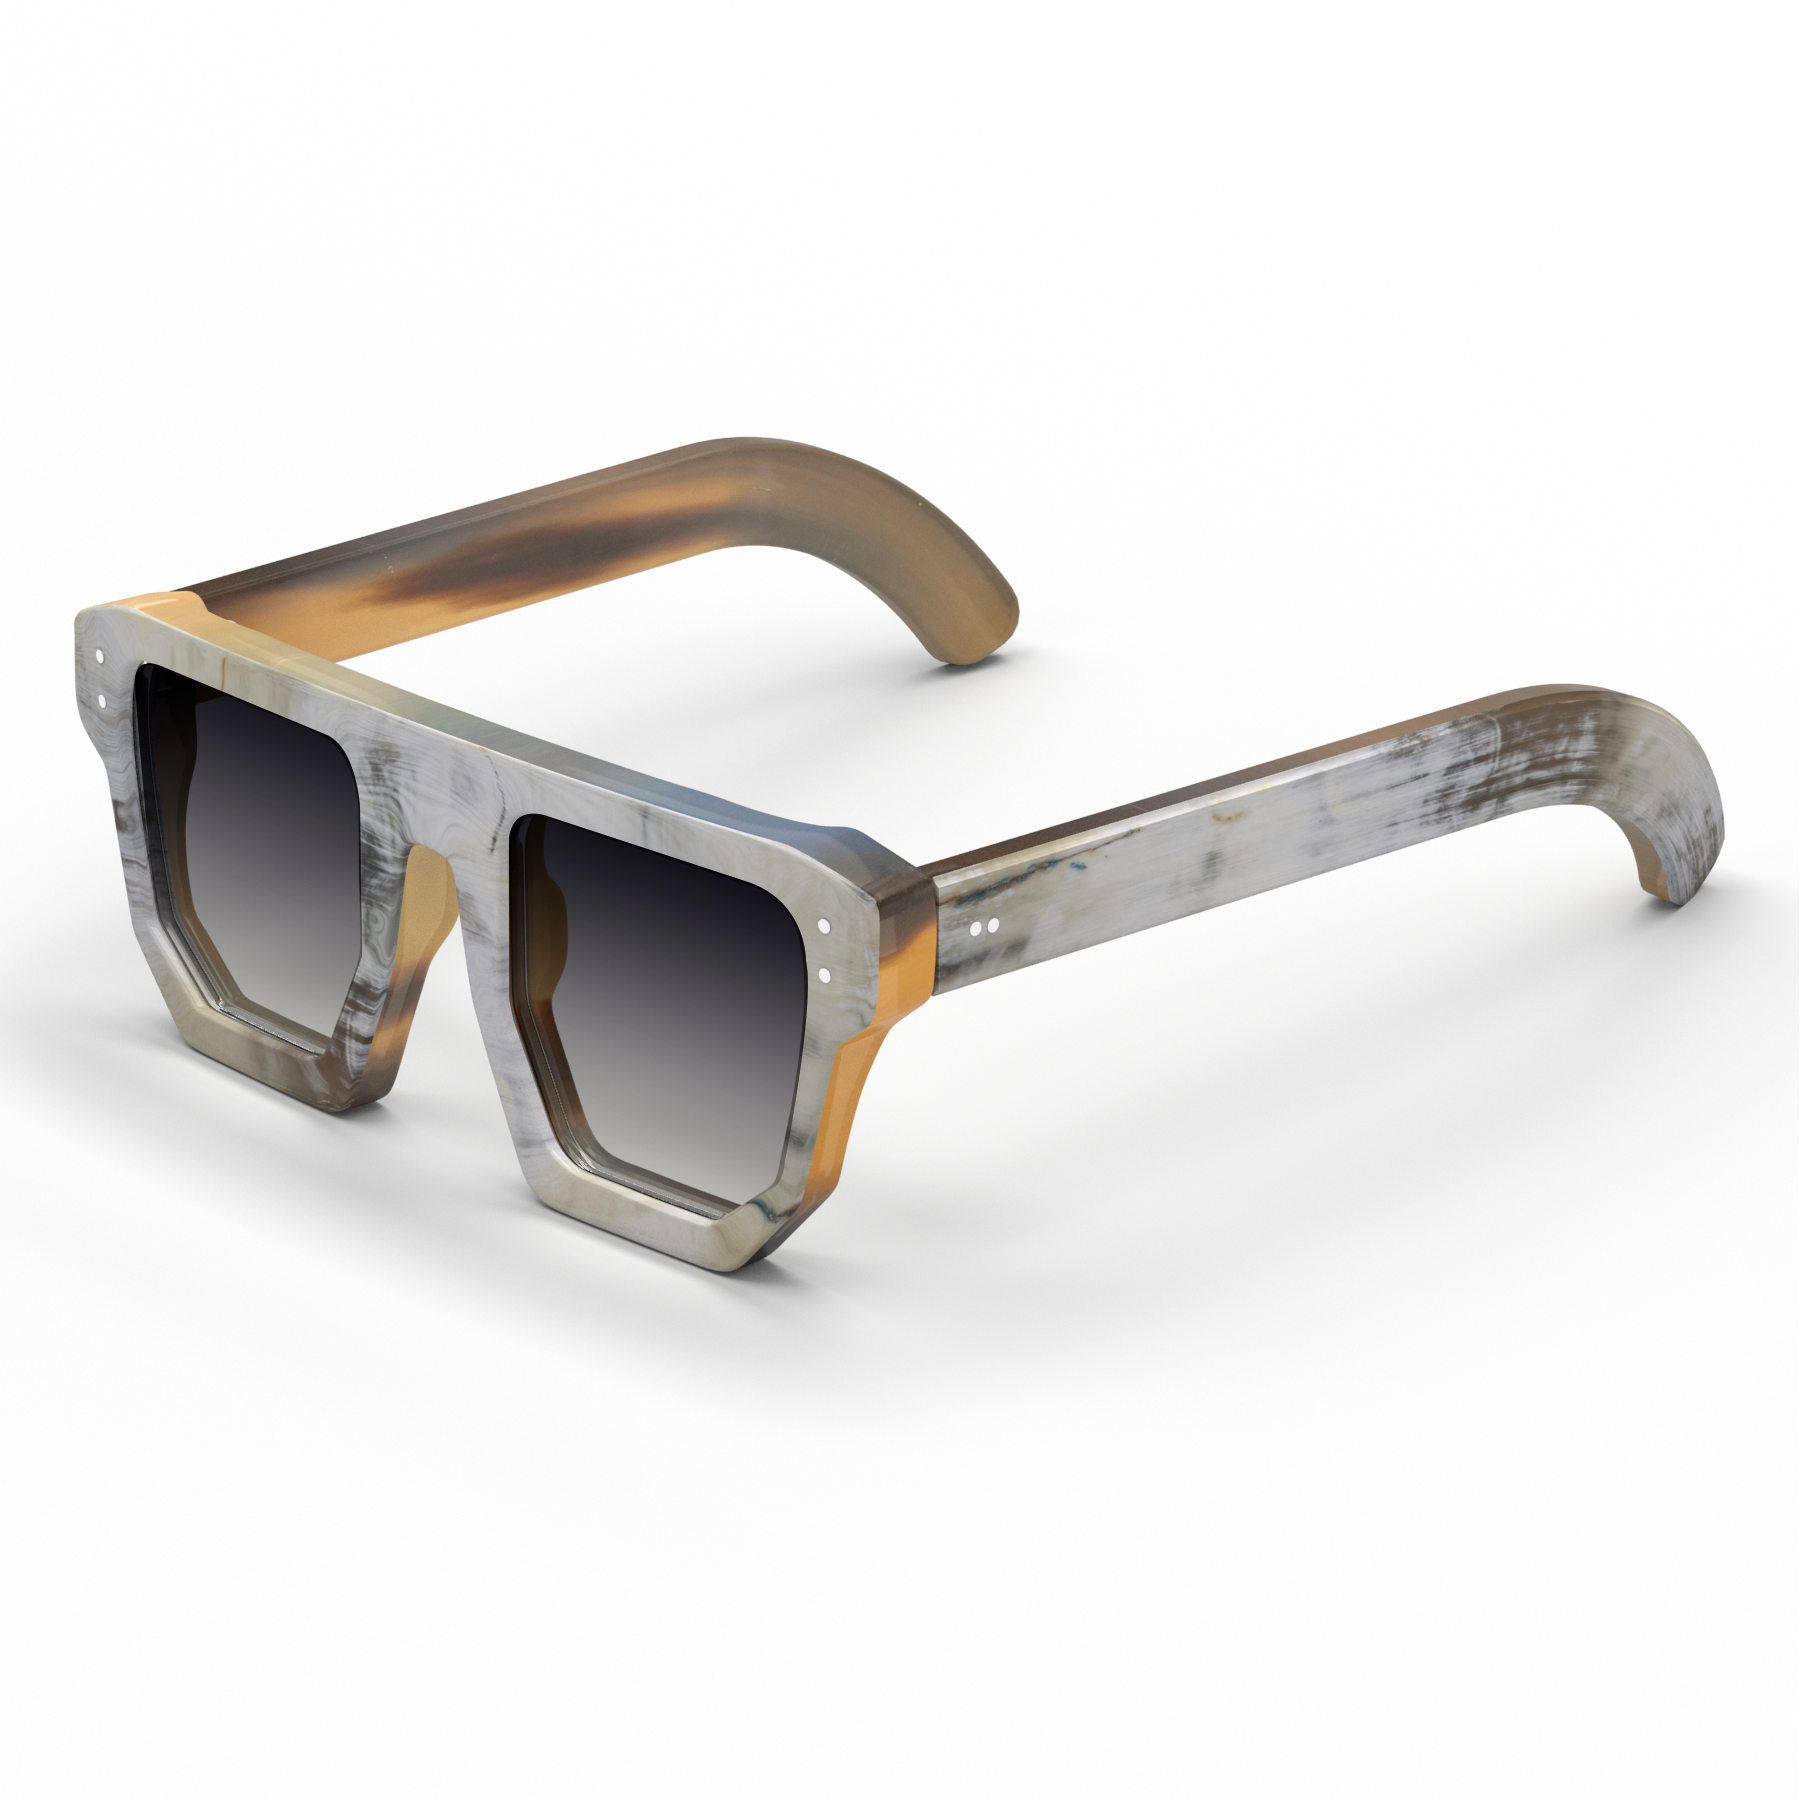 New Cool Fashion Mens Wooden Sunglasses Sport Buffalo Horn Glass